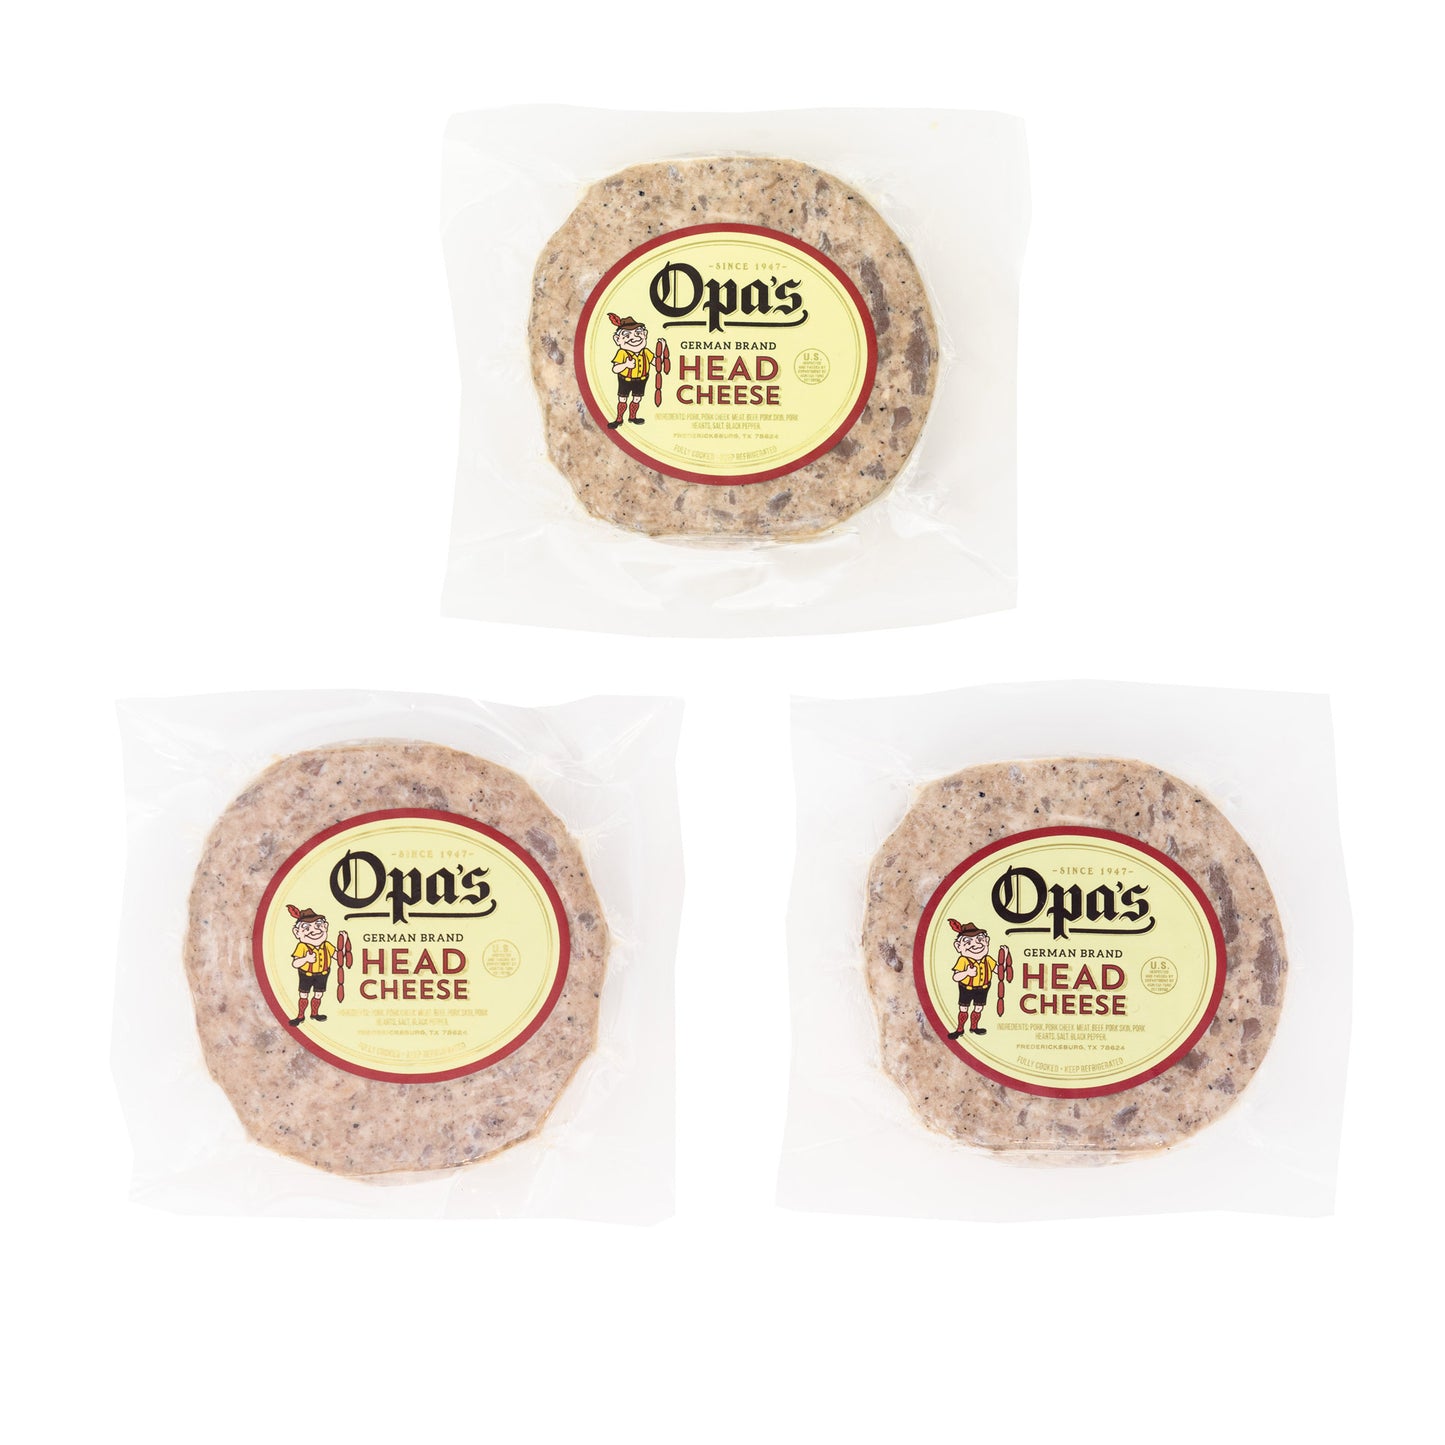 Opa's German Brand Head Cheese